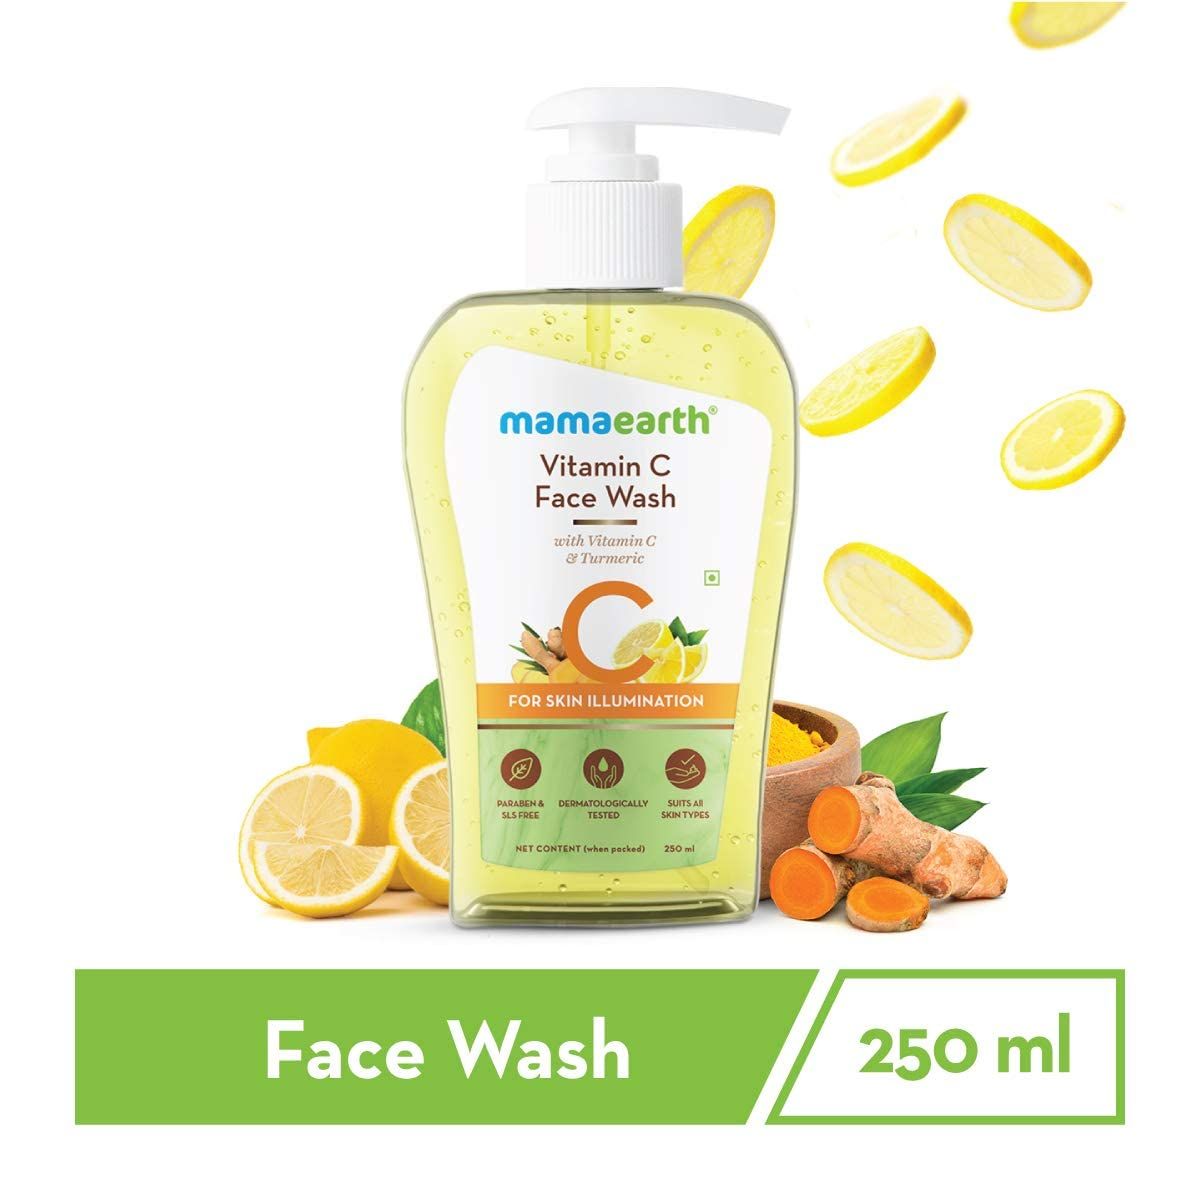 Vitamin C Face Wash with Vitamin C and Turmeric for Skin Illumination - 250ml